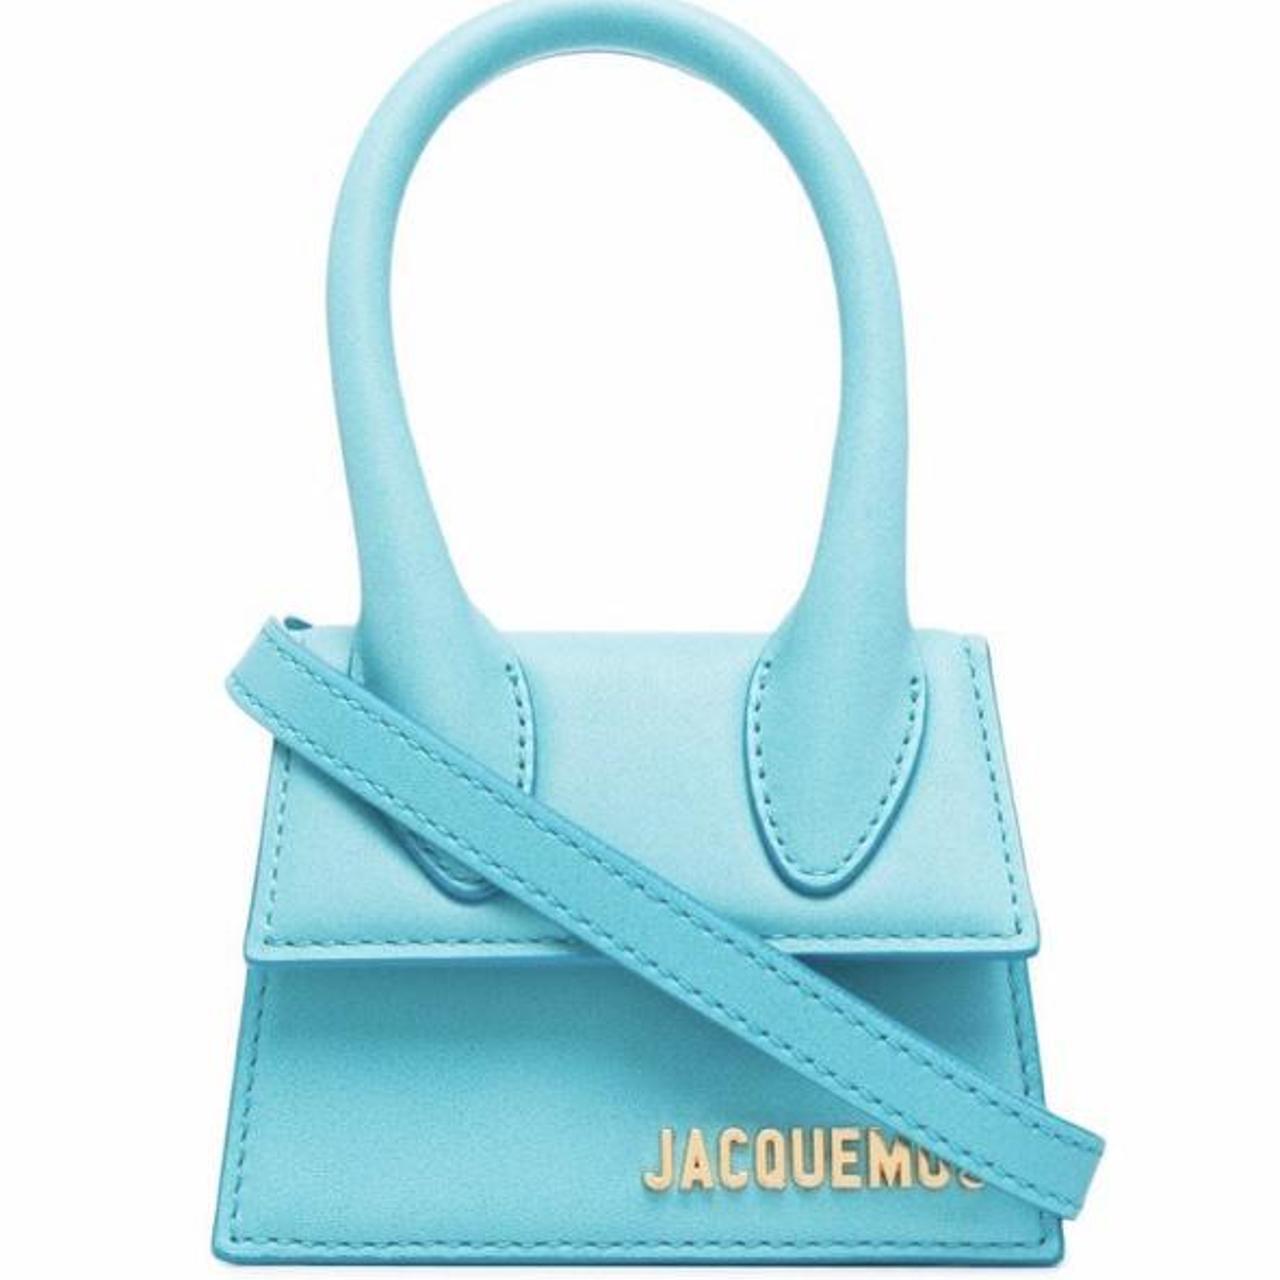 Product Image 1 - Jacquemus blue le chiquito bag,